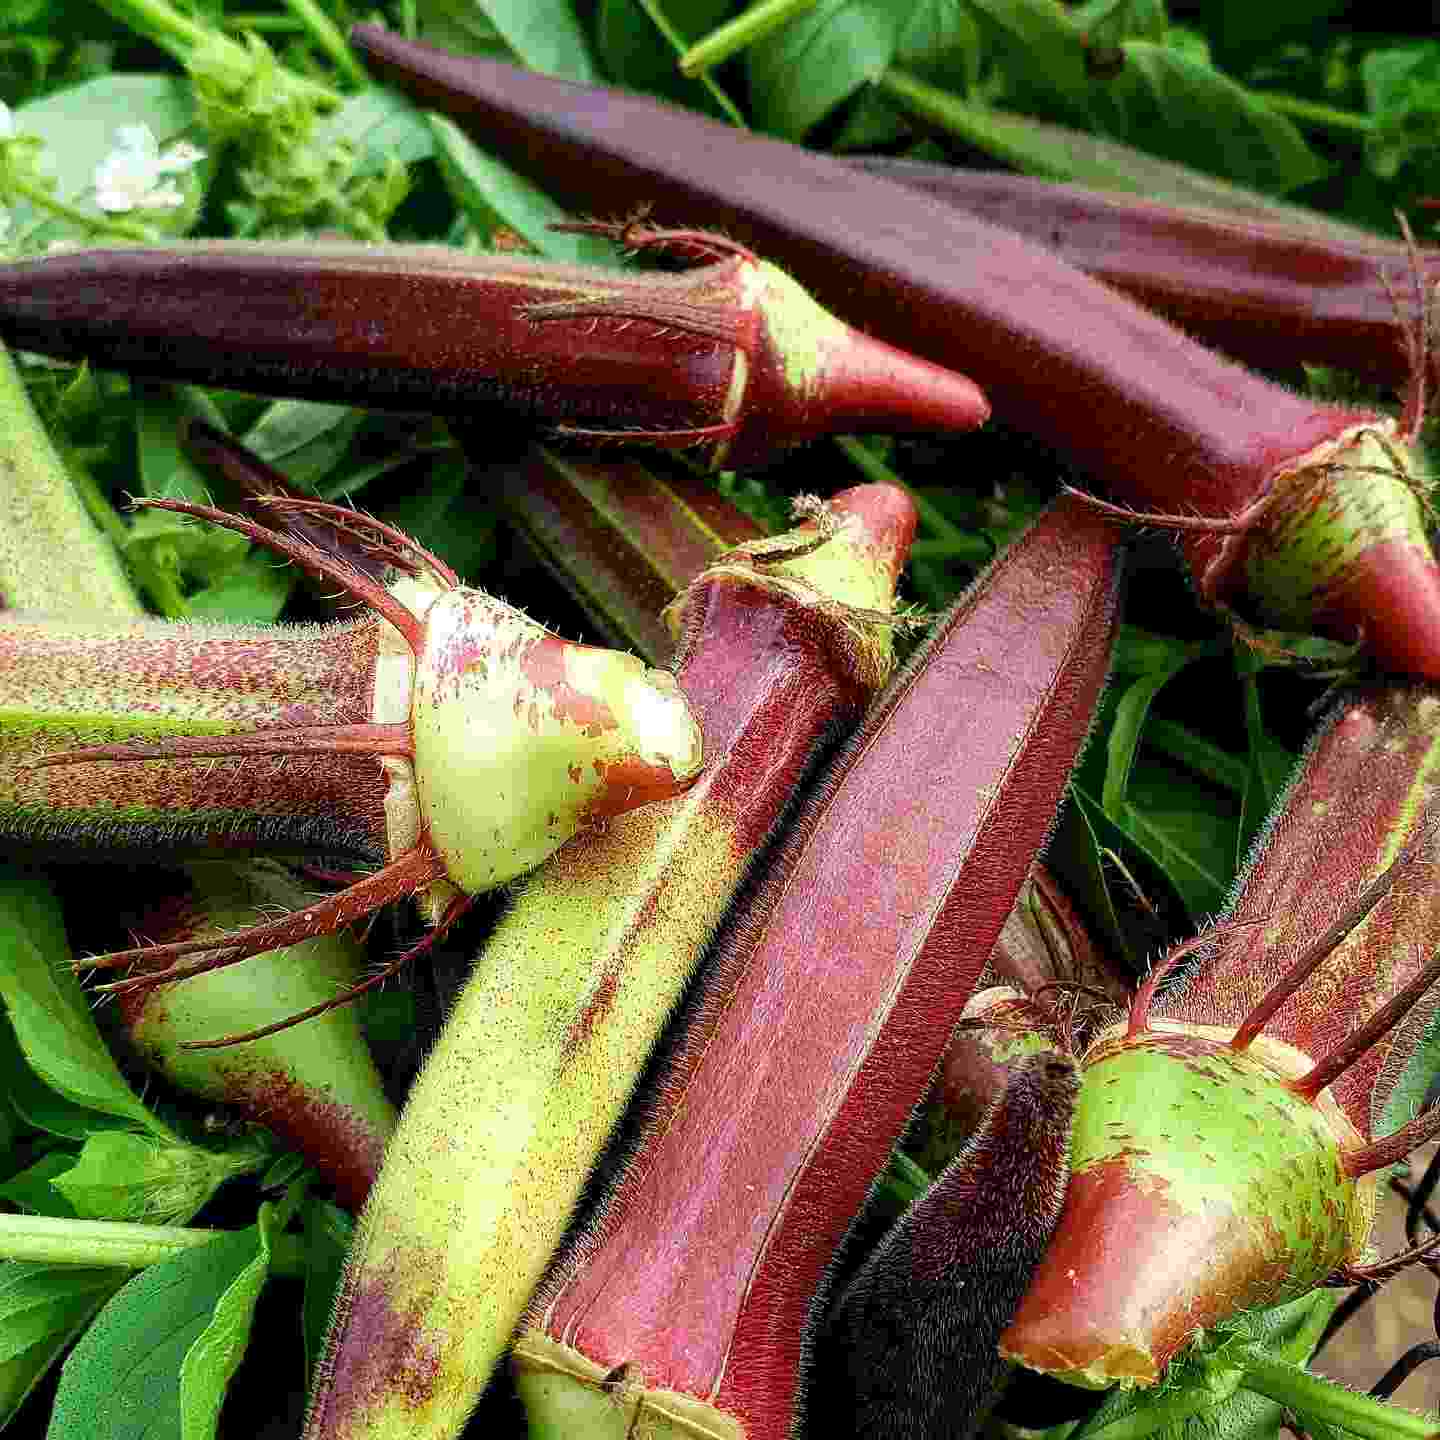 A detailed image capturing the vibrant, freshly harvested okra